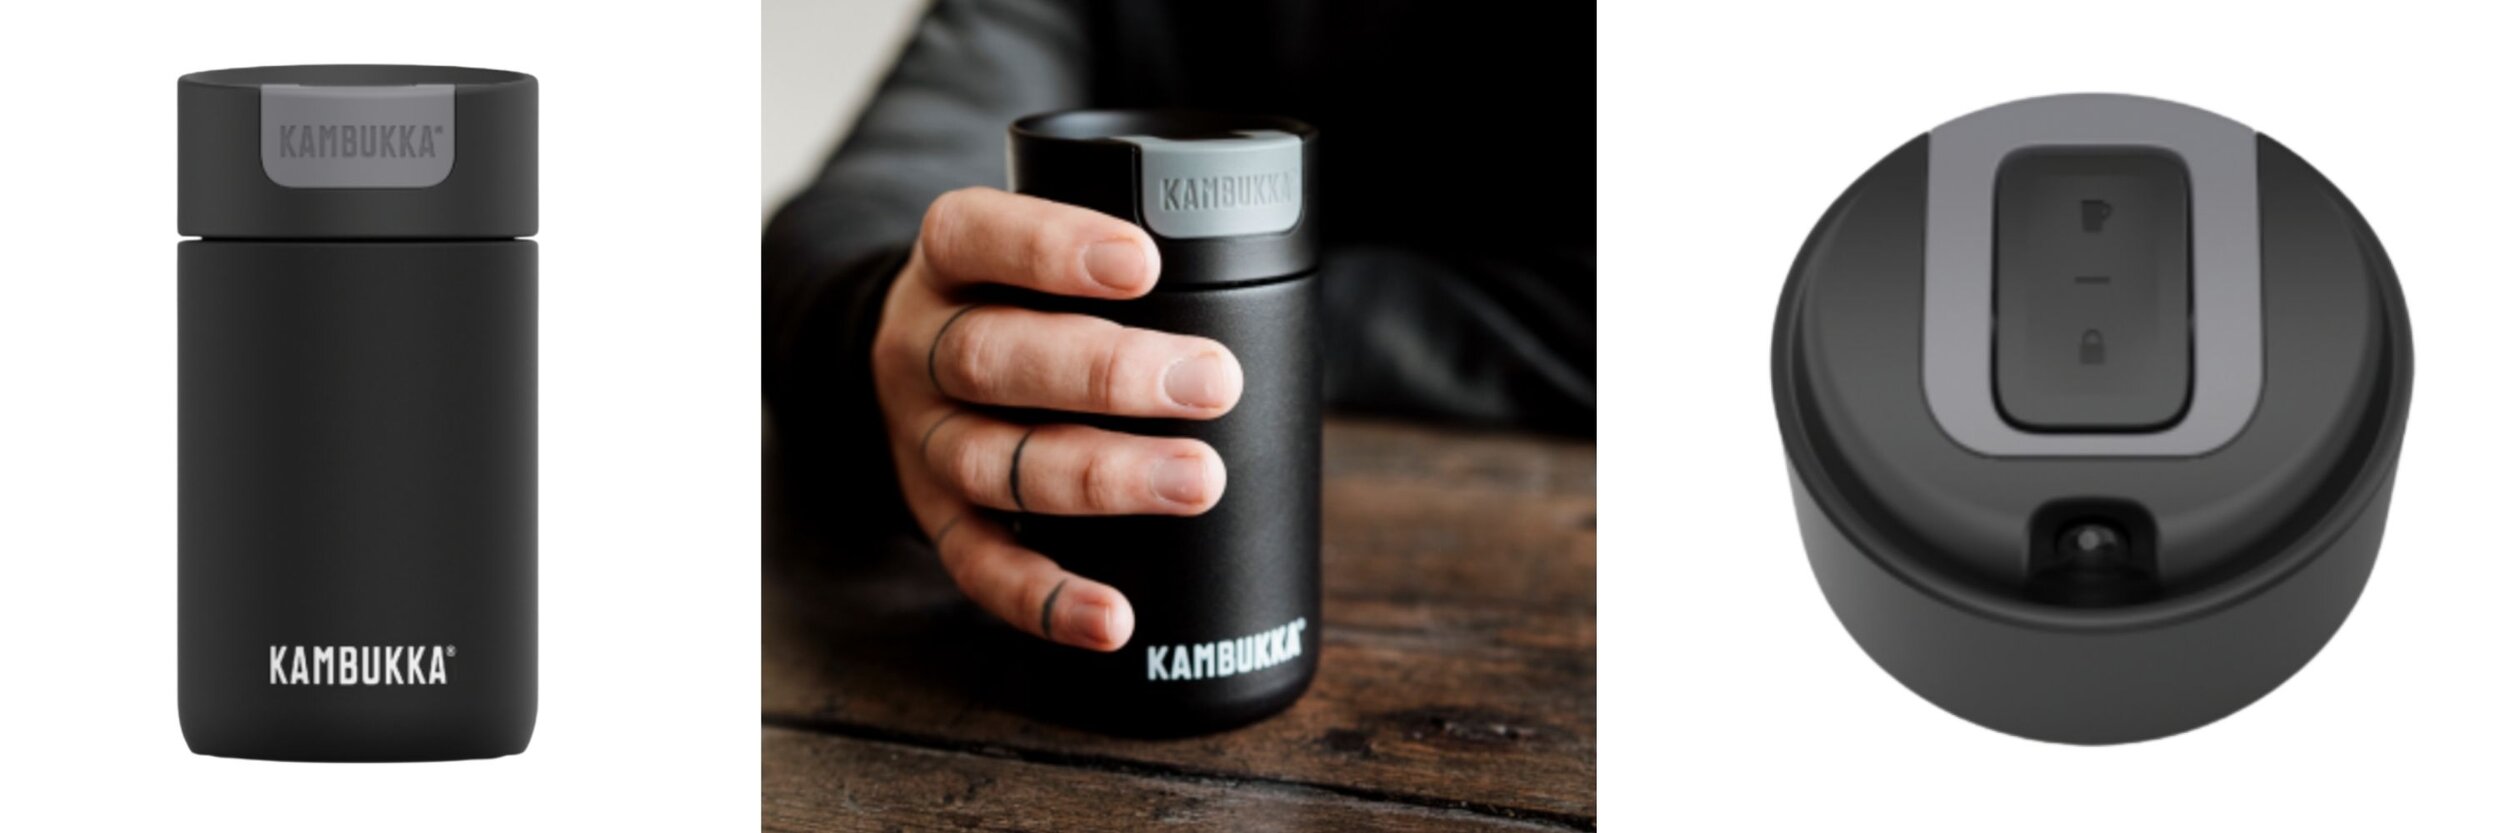 Kambukka Reusable Coffee Cup Review